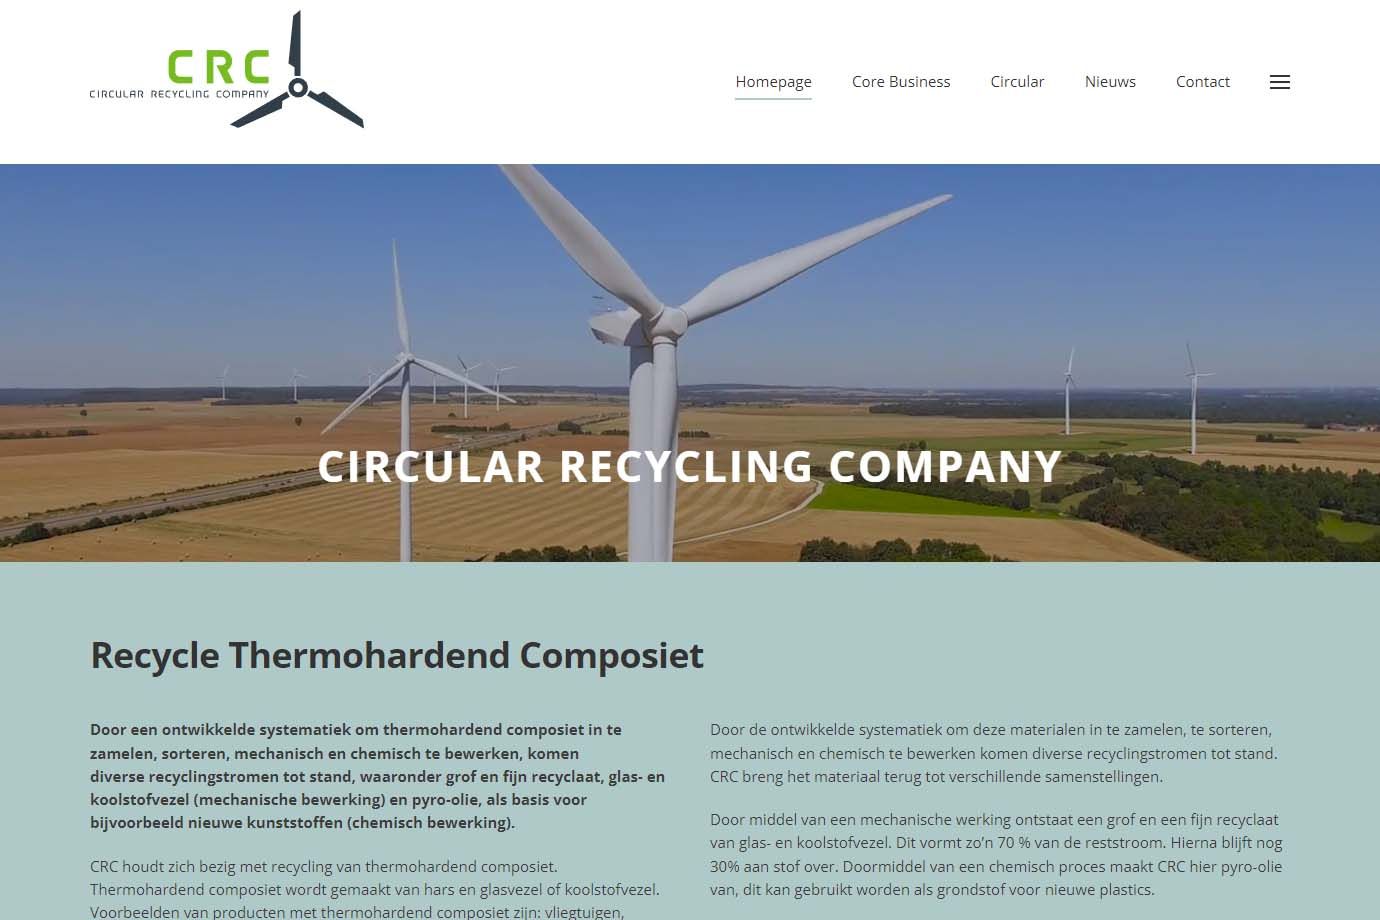 Circular Recycling Company